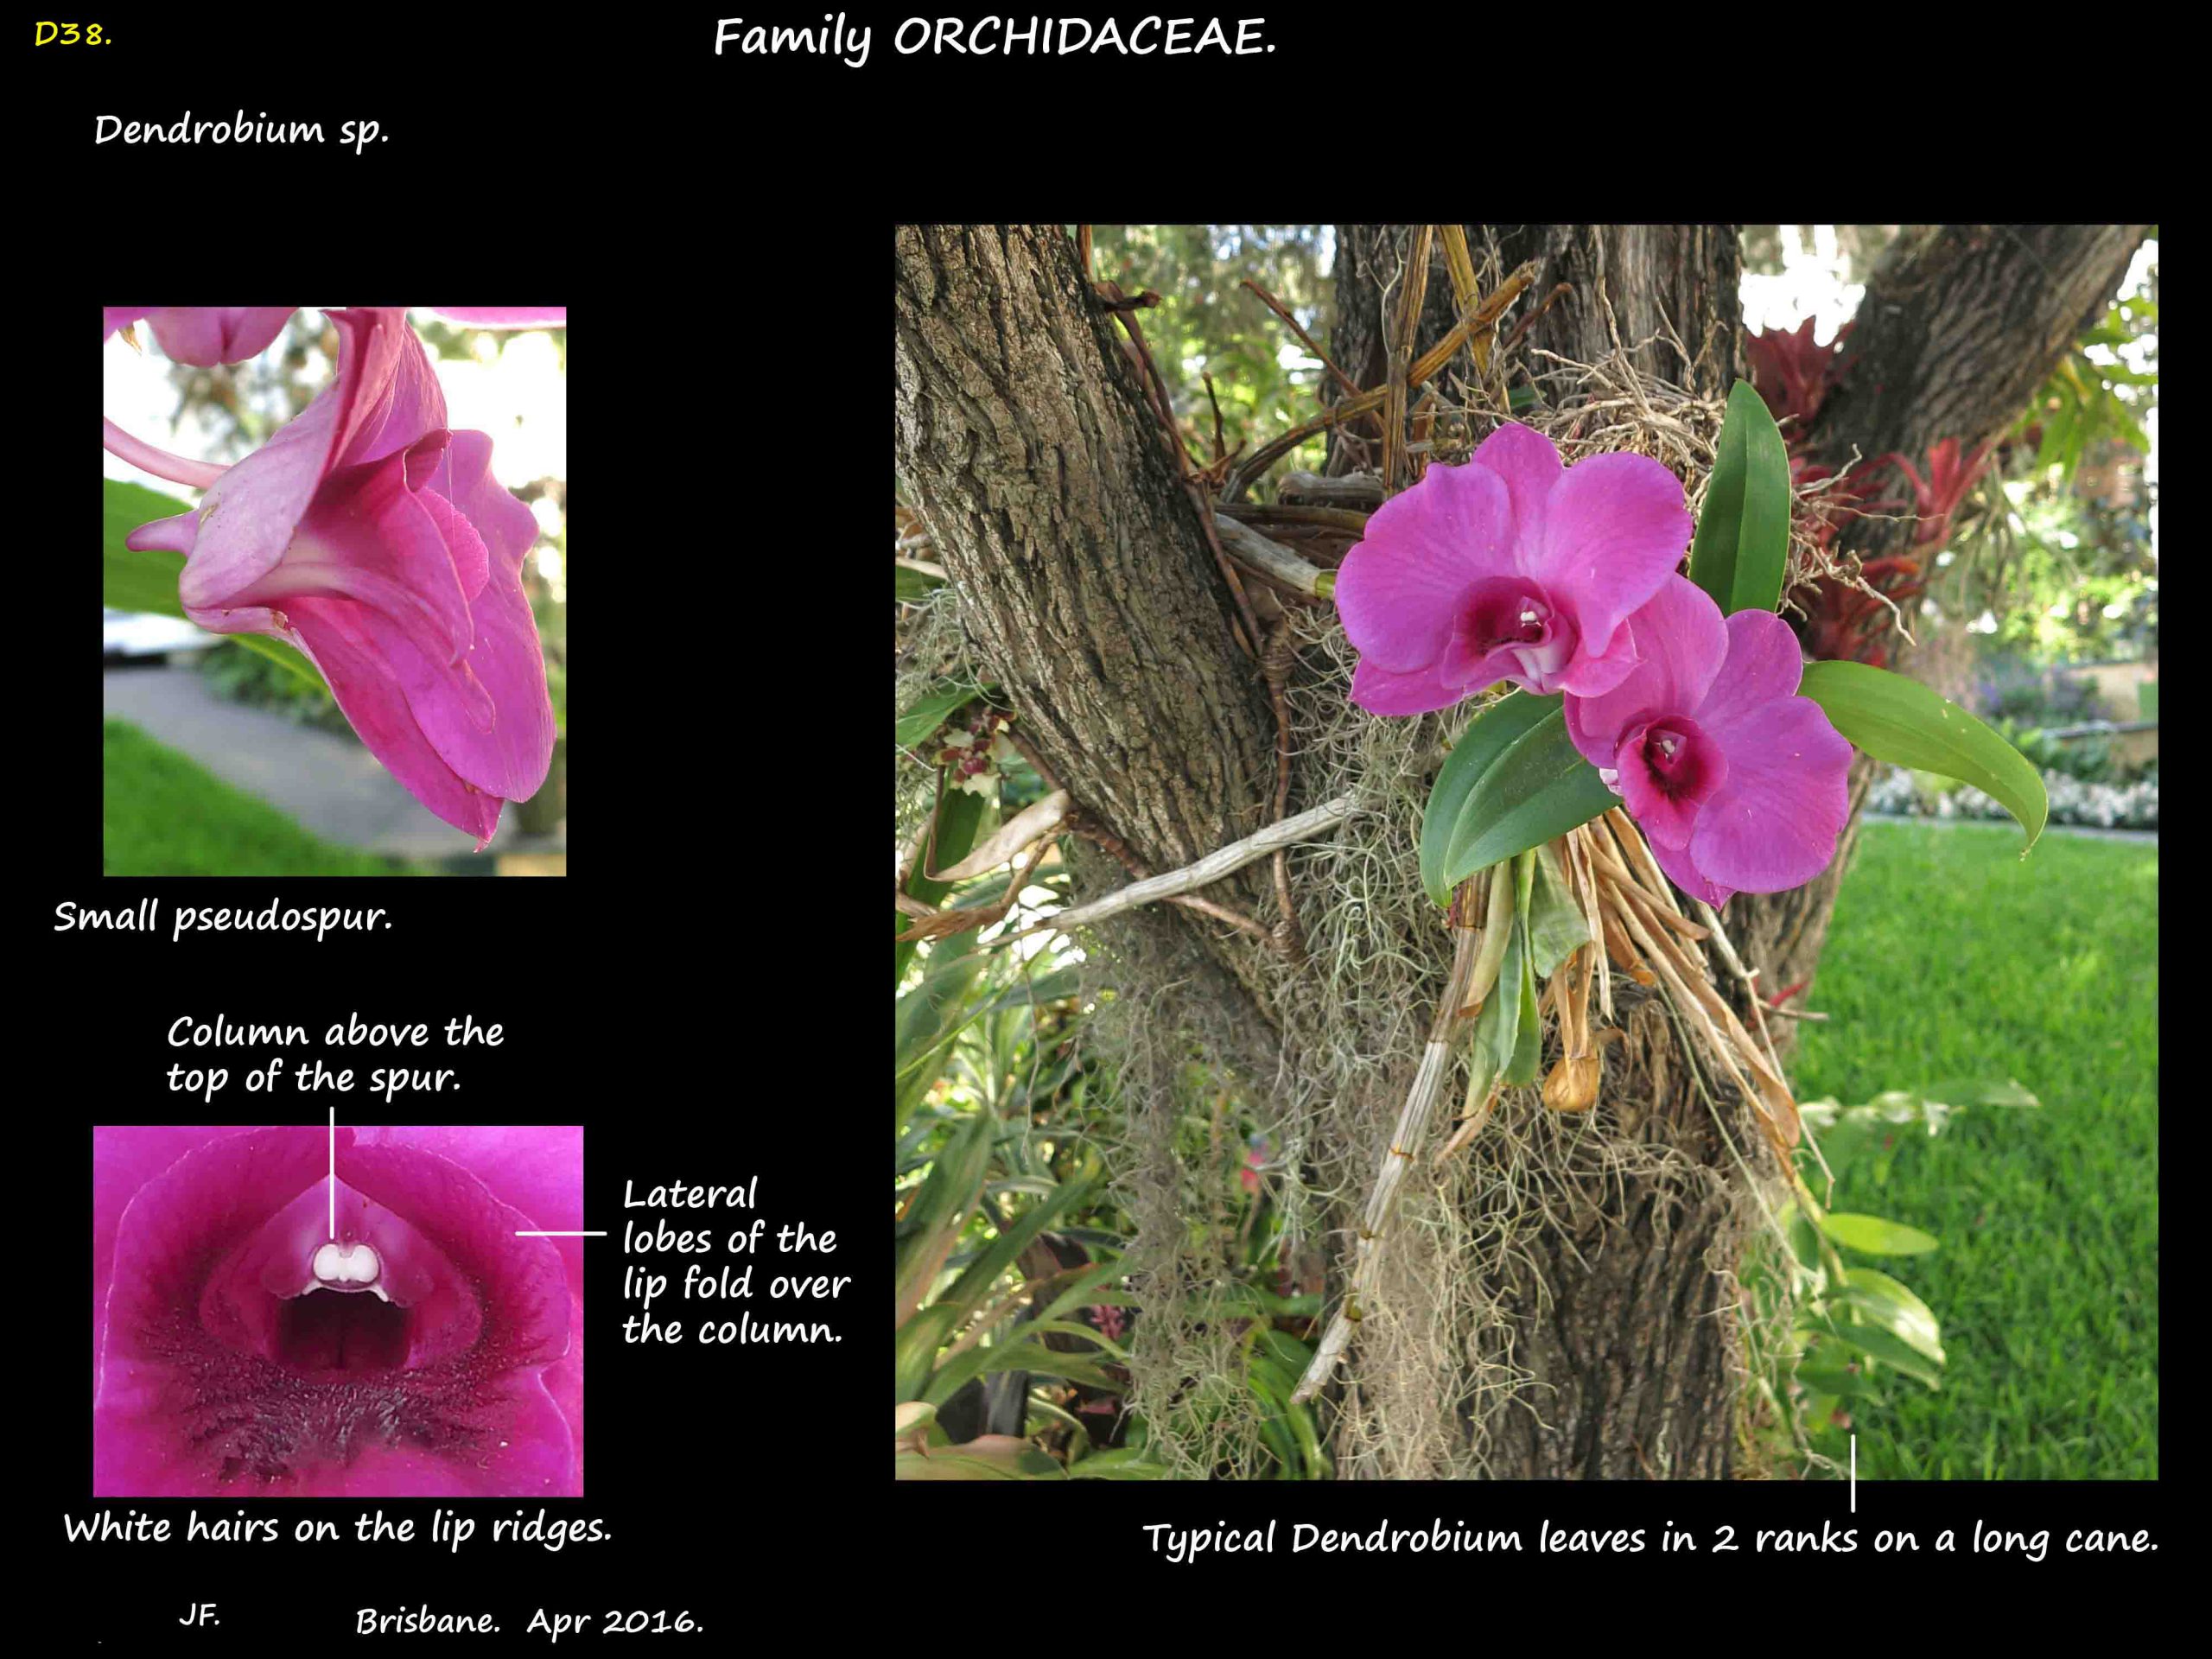 9 A typical Dendrobium